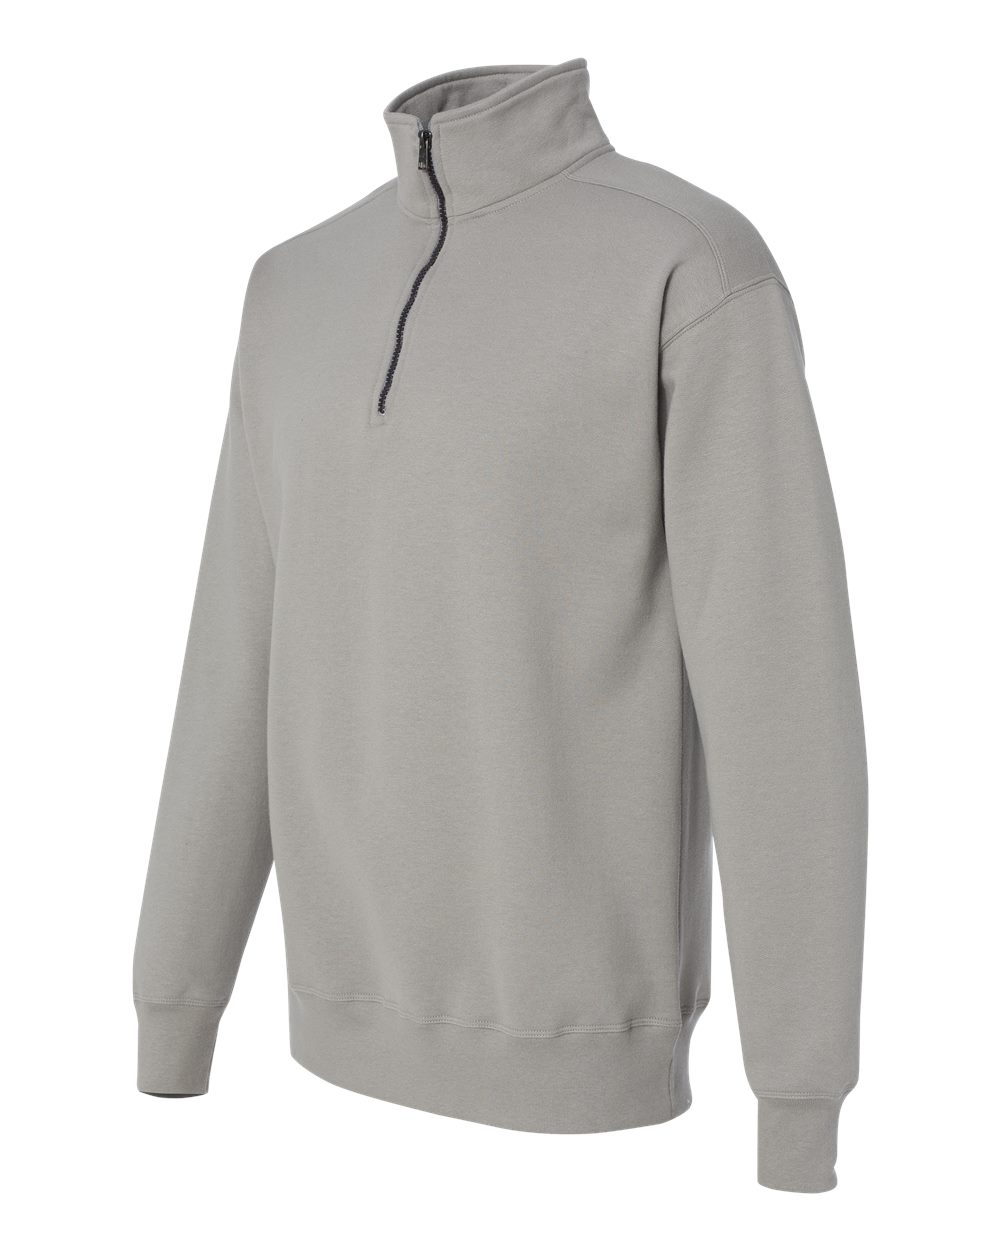 Men's Nano Premium Soft Lightweight Fleece Jacket - image 2 of 3